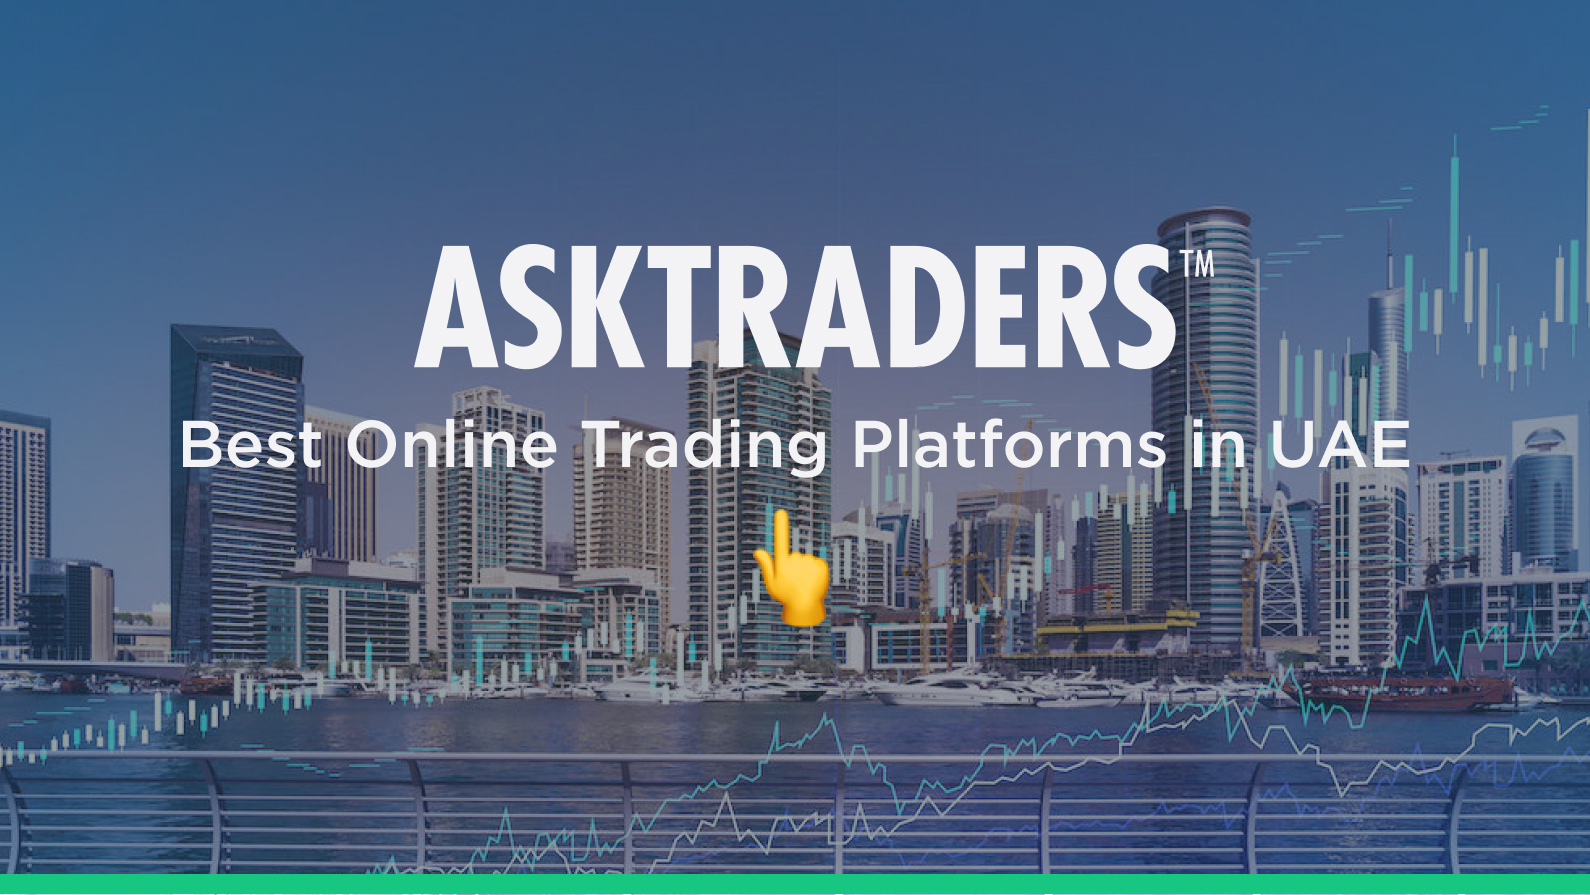 Best trading platform in oman